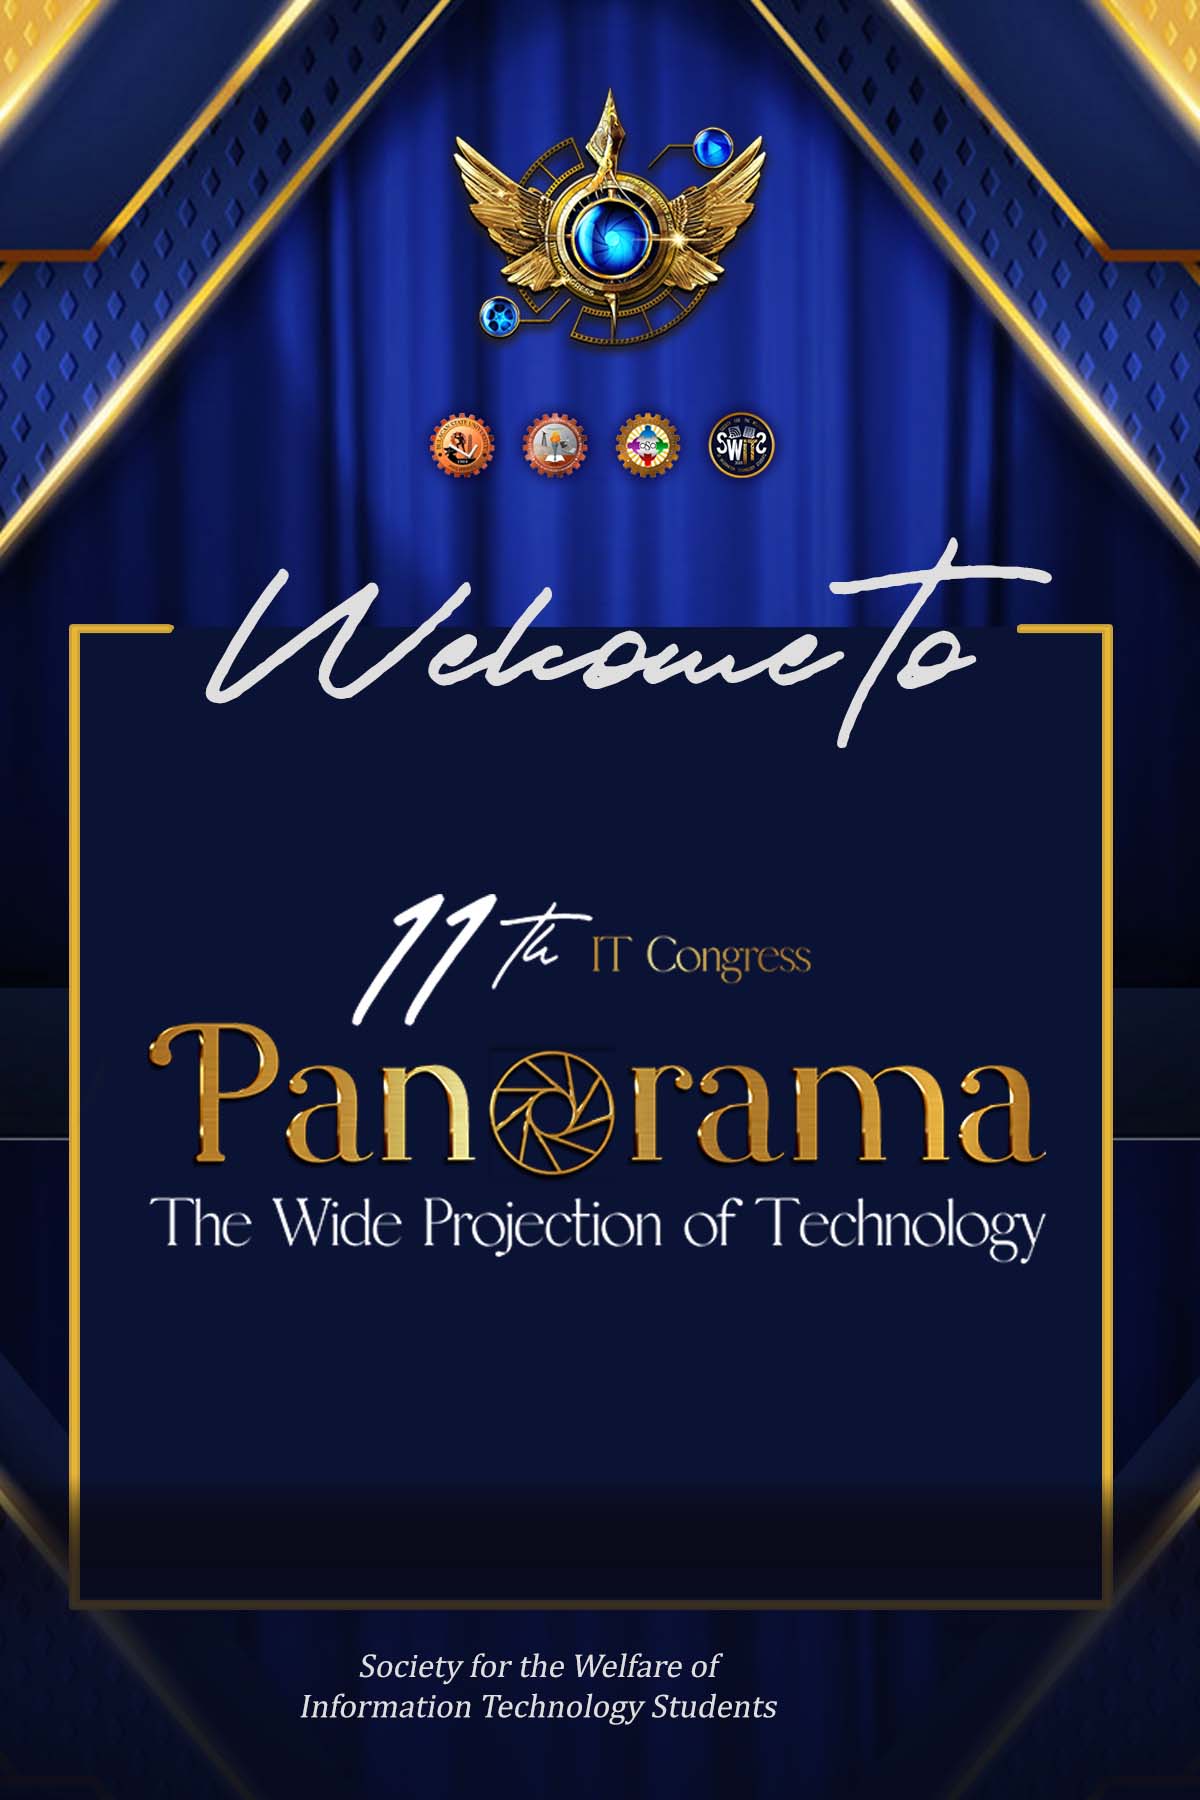 11th IT Congress "Panorama: